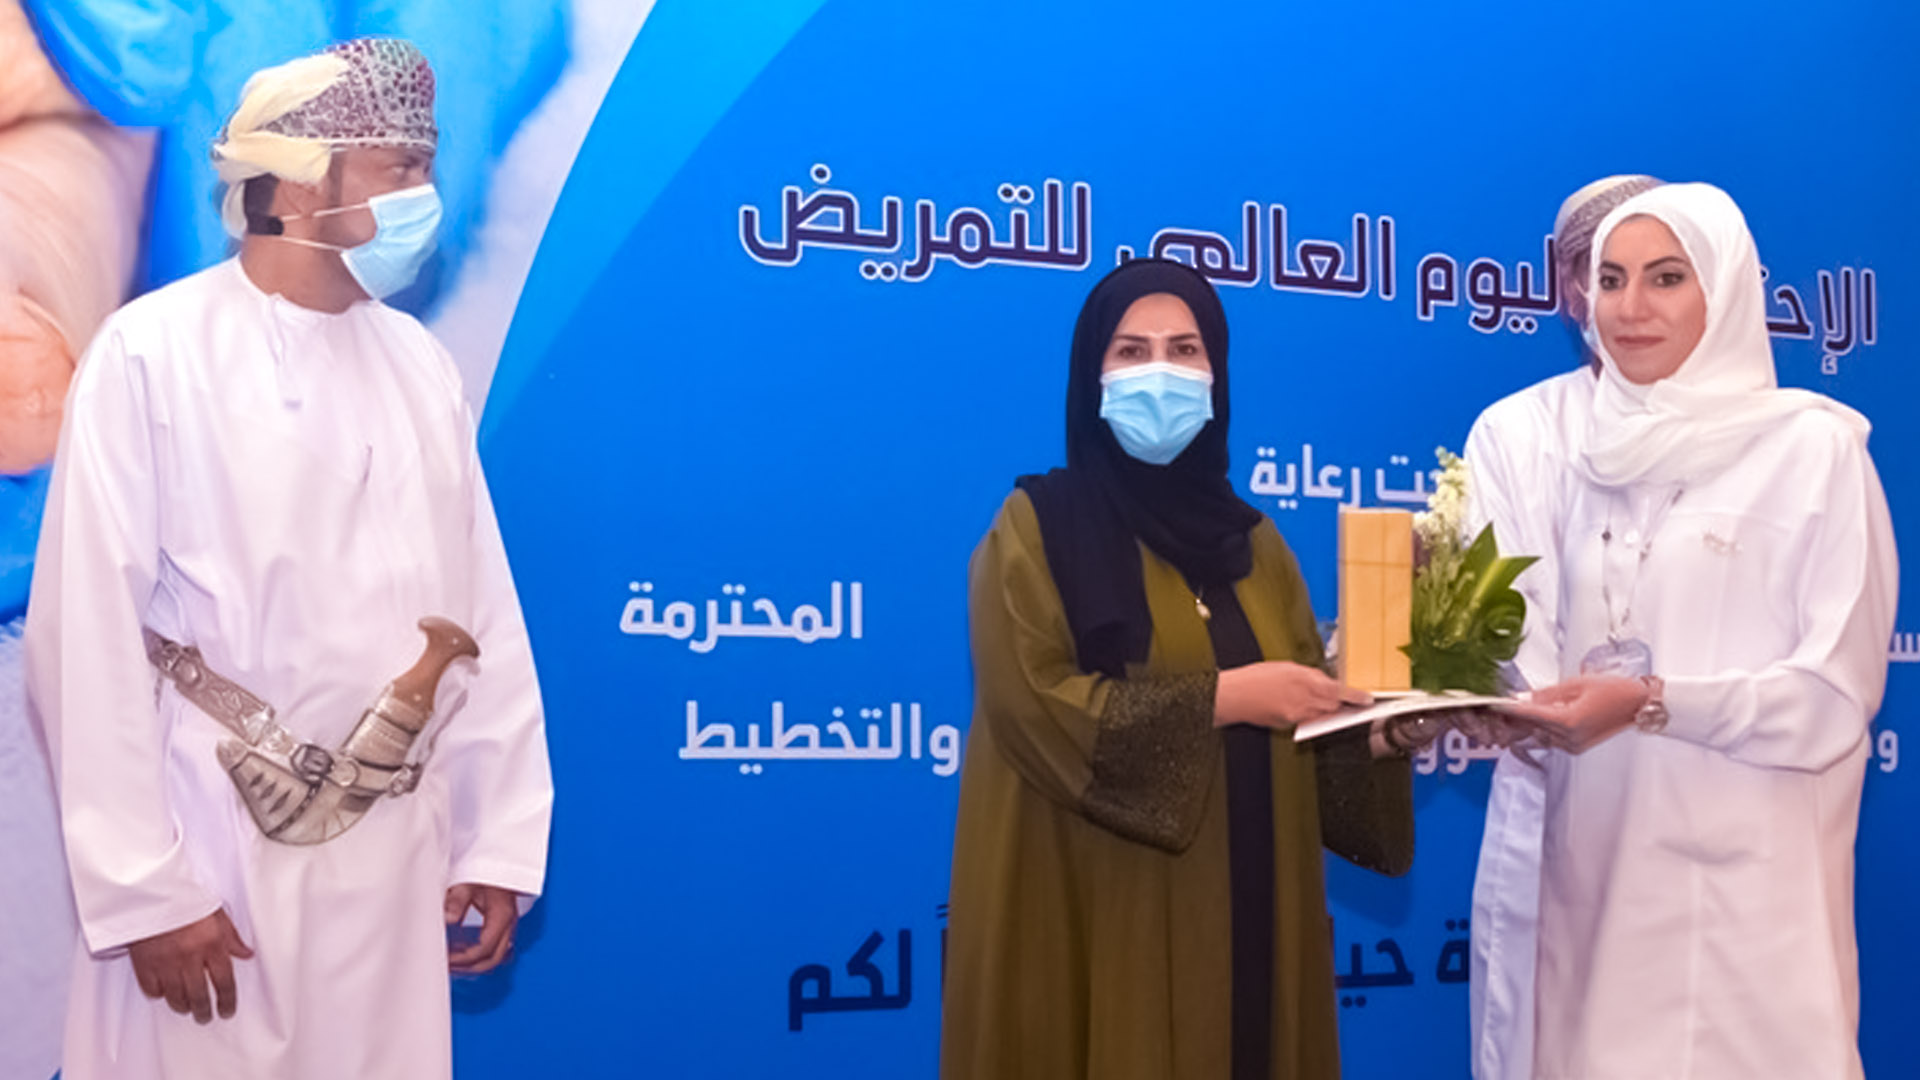 International Nurses Day is celebrated in Oman